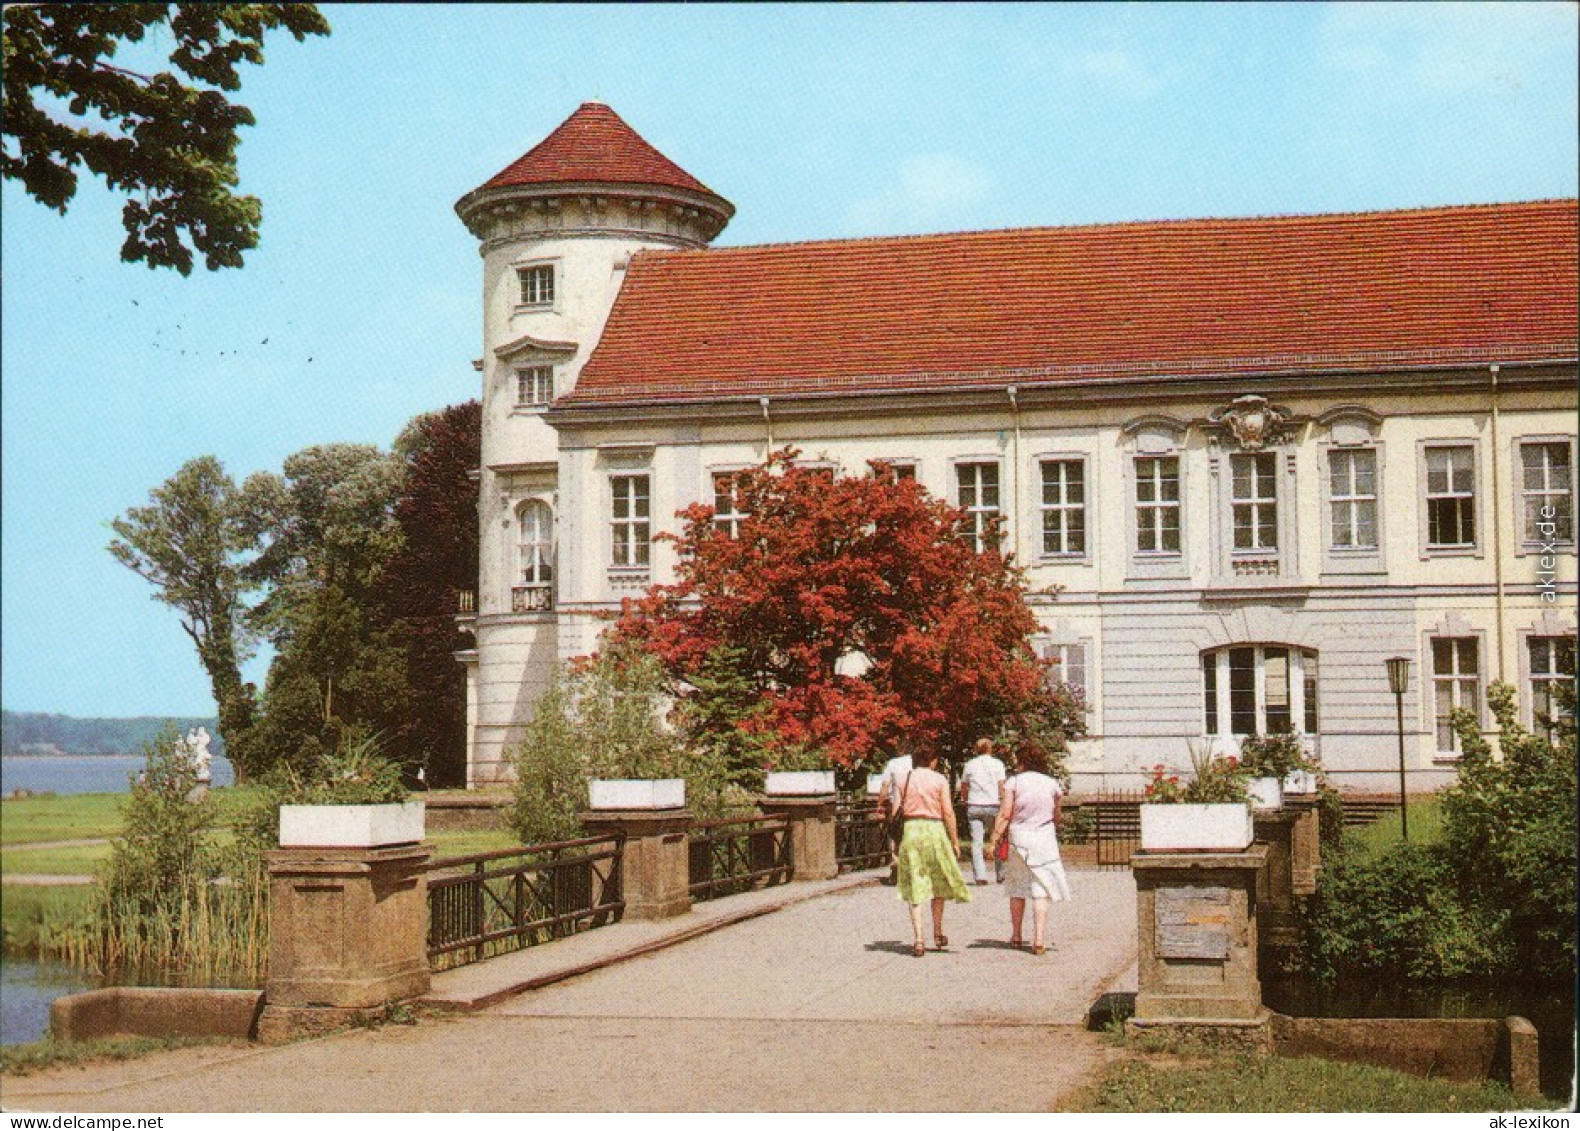 Ansichtskarte Rheinsberg Schloss Mit Rhinbrücke 1989 - Rheinsberg